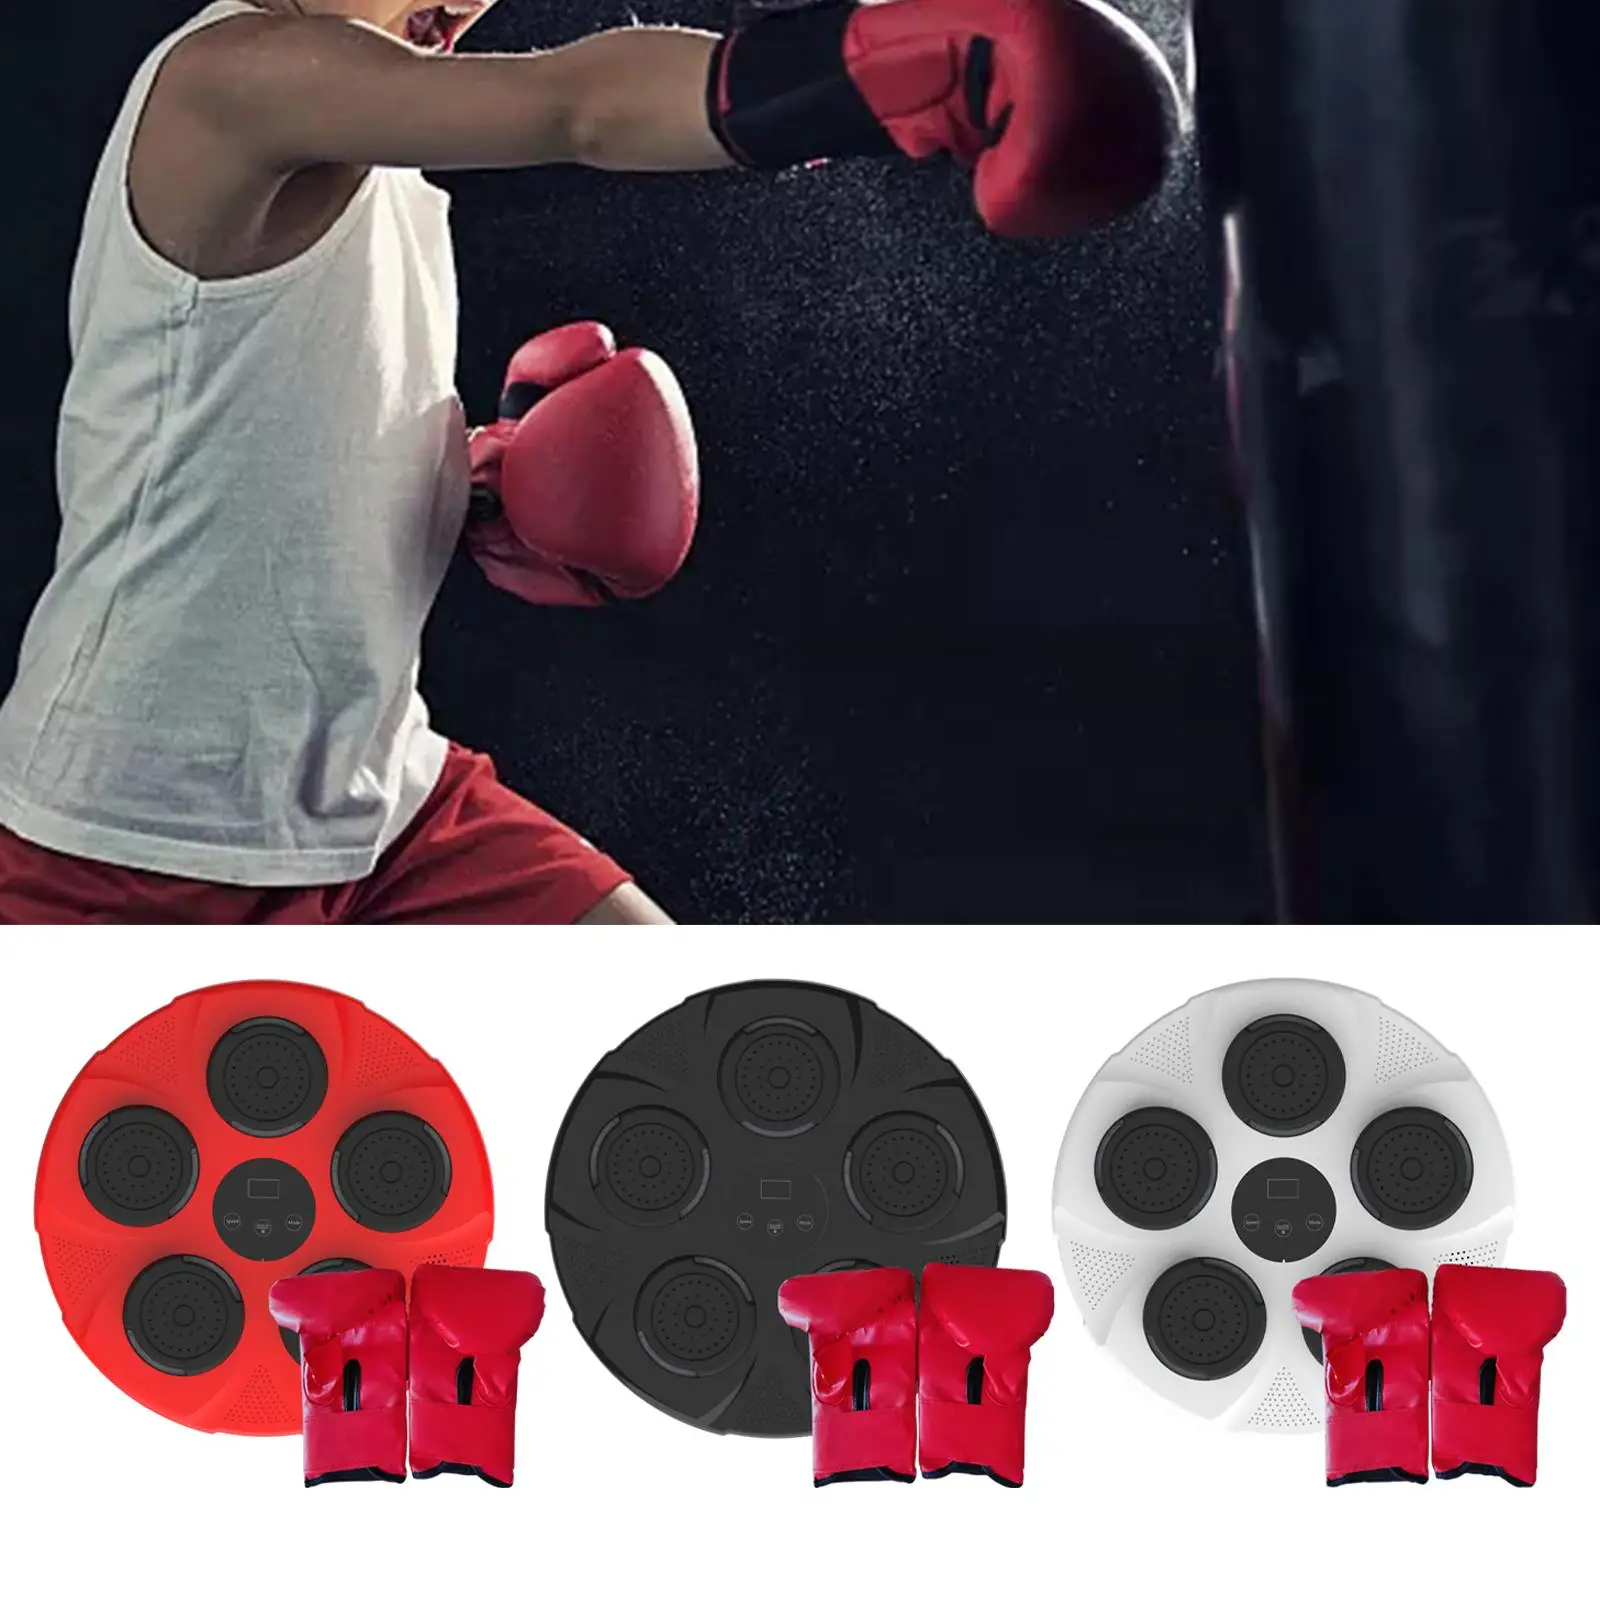 Music Boxing Machine Equipment RGB Light for Strength Training Sports Indoor